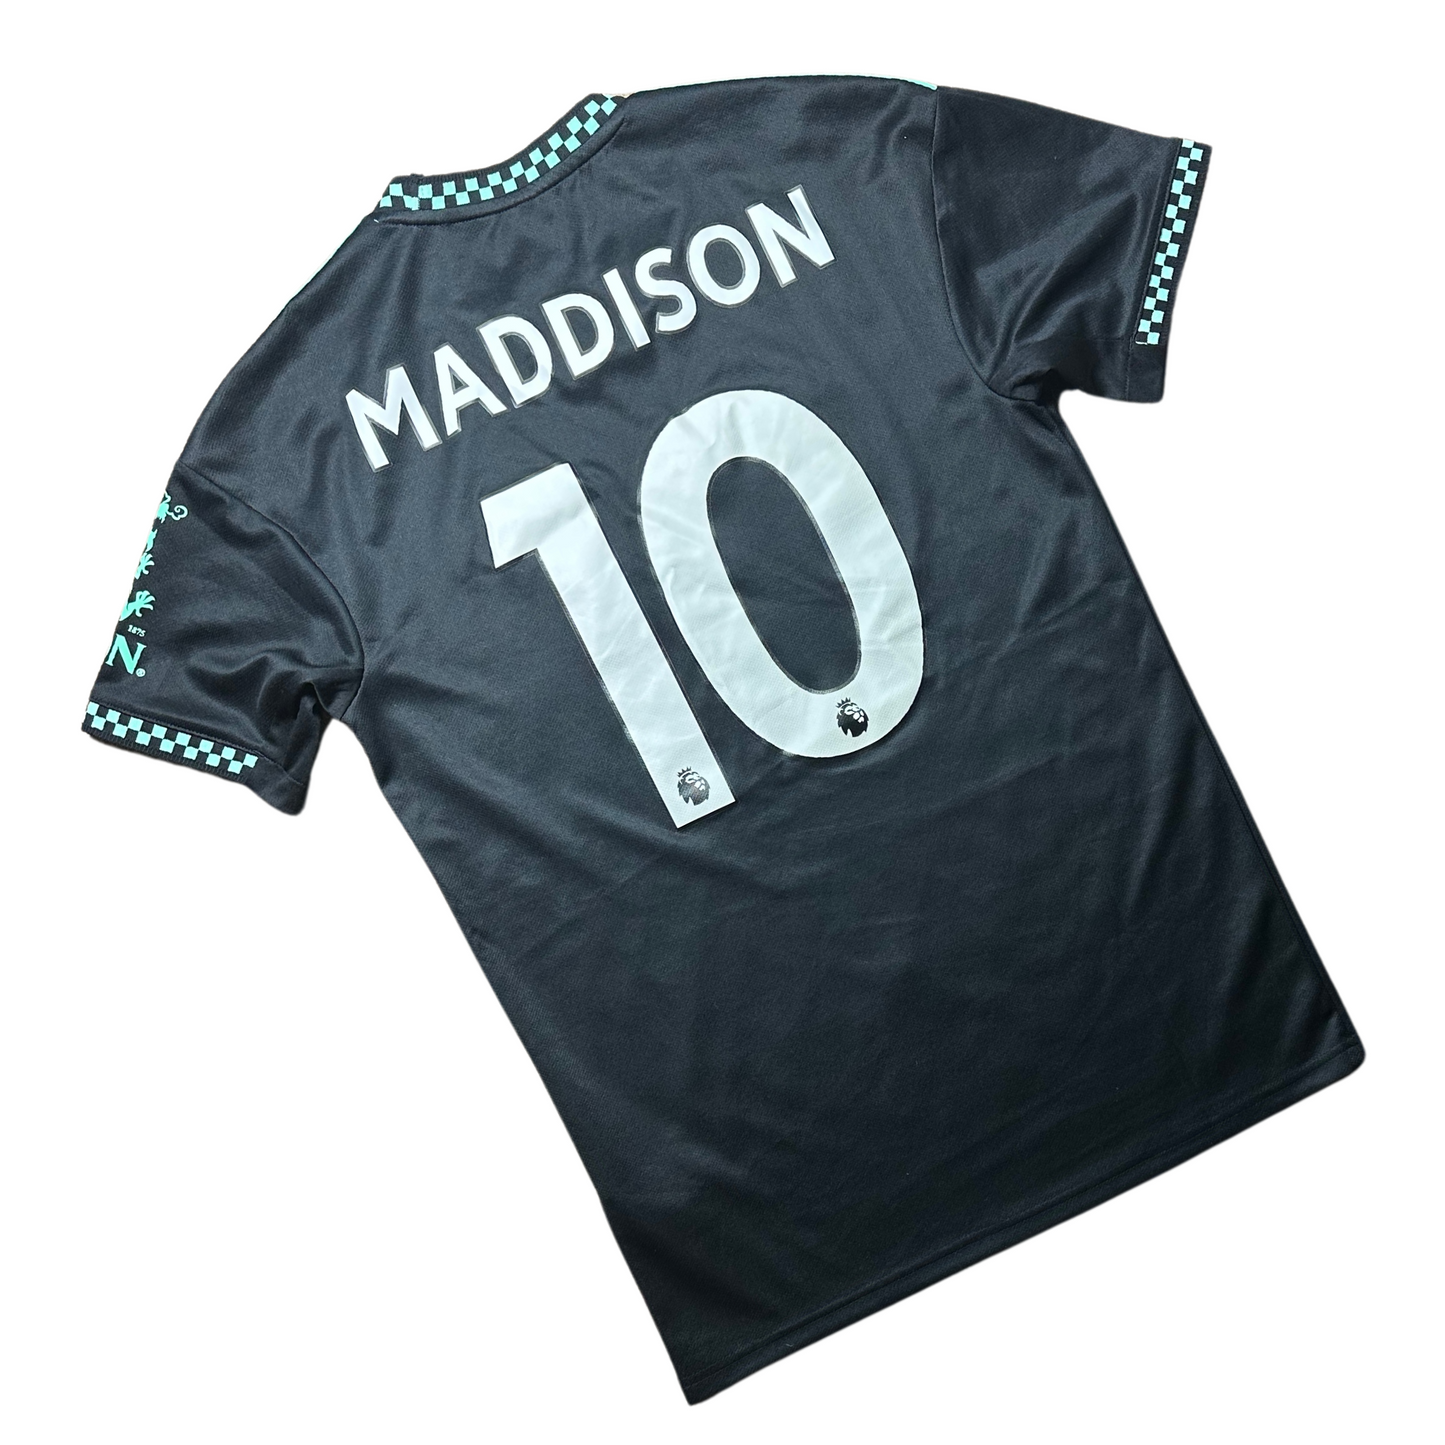 Leicester 2022/2023 Away Football Shirt Maddison (10)